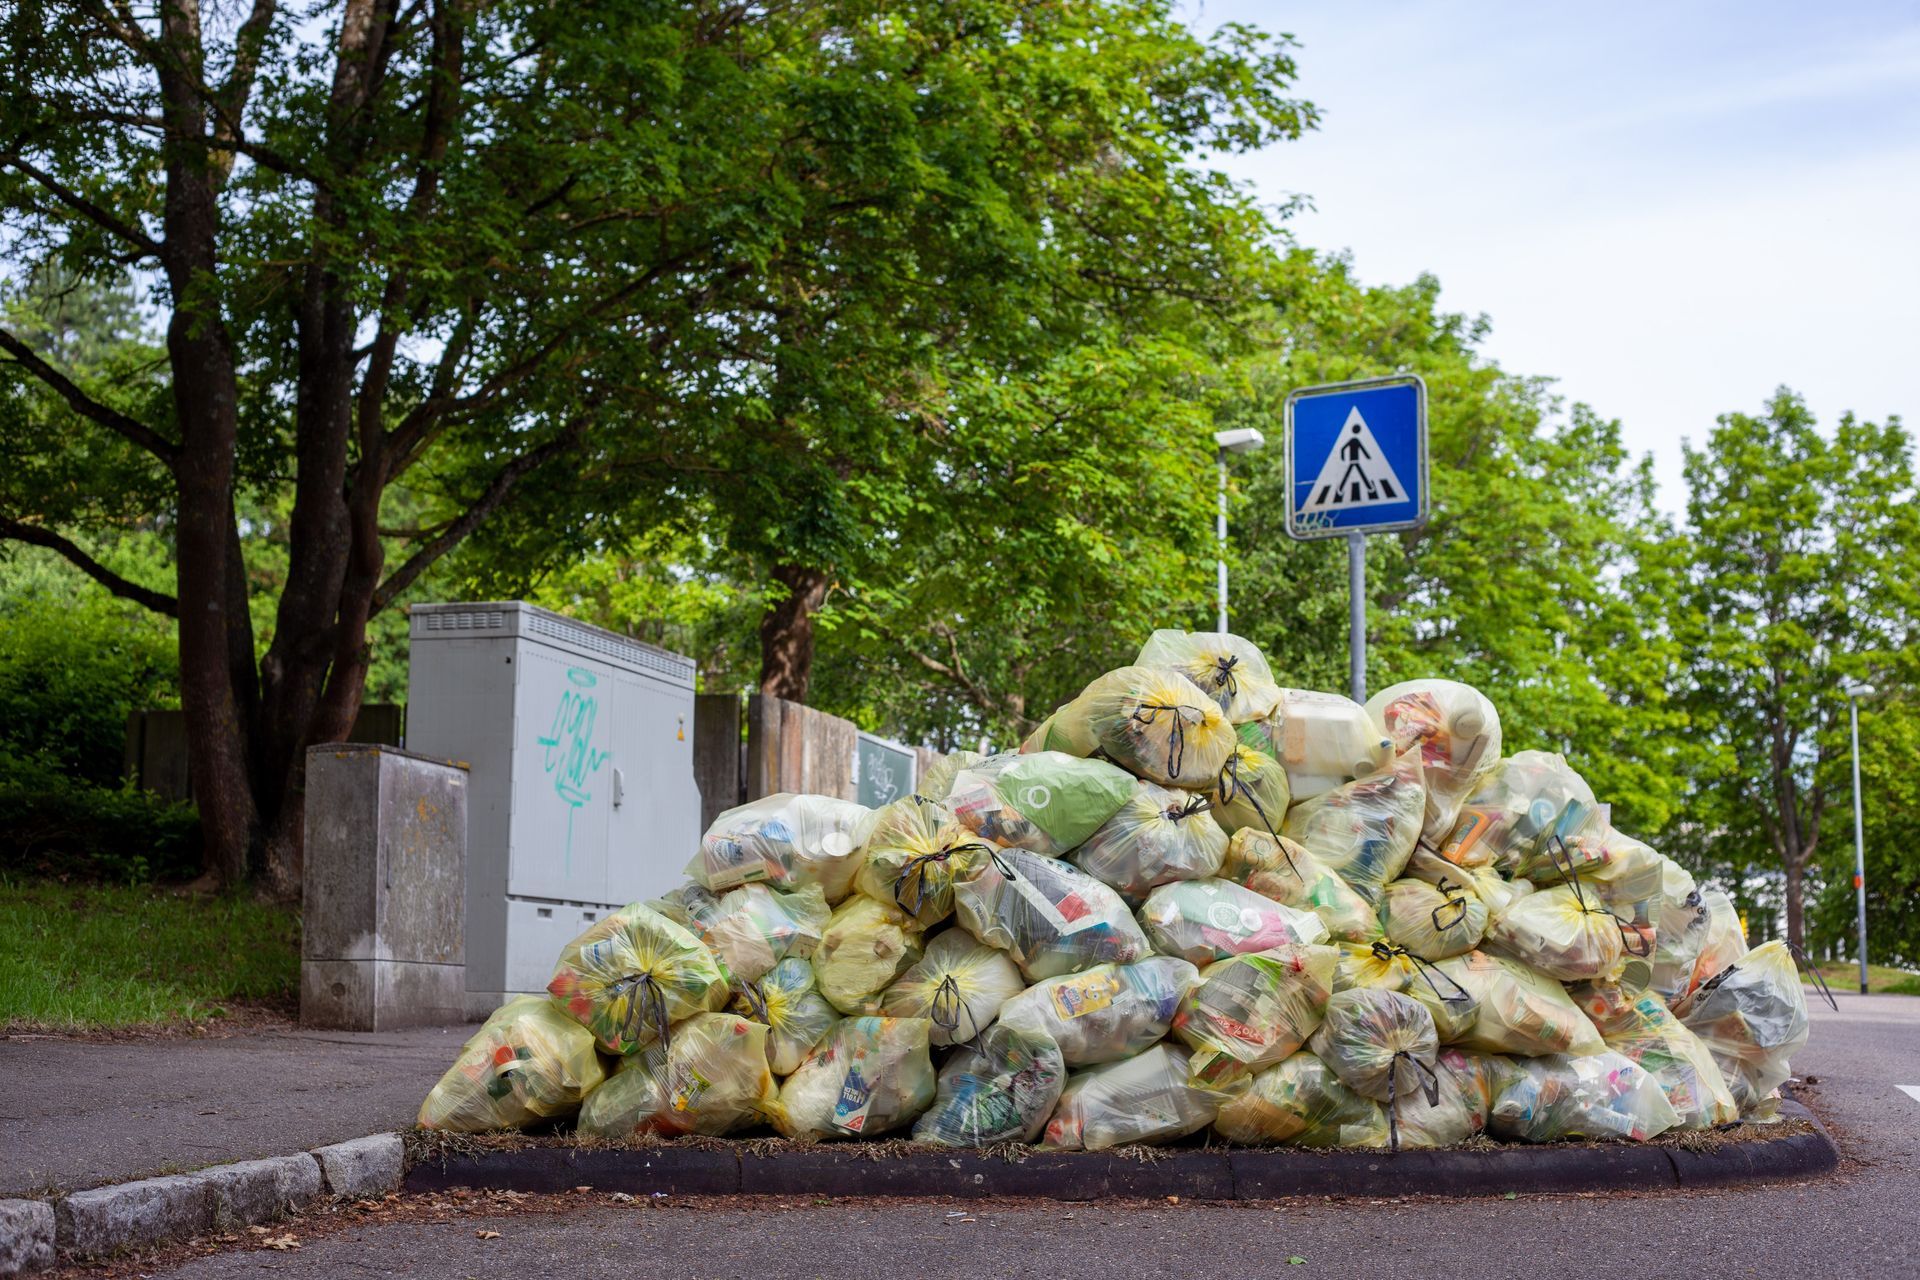 mala ejecución de reducción de residuos en entornos urbanos